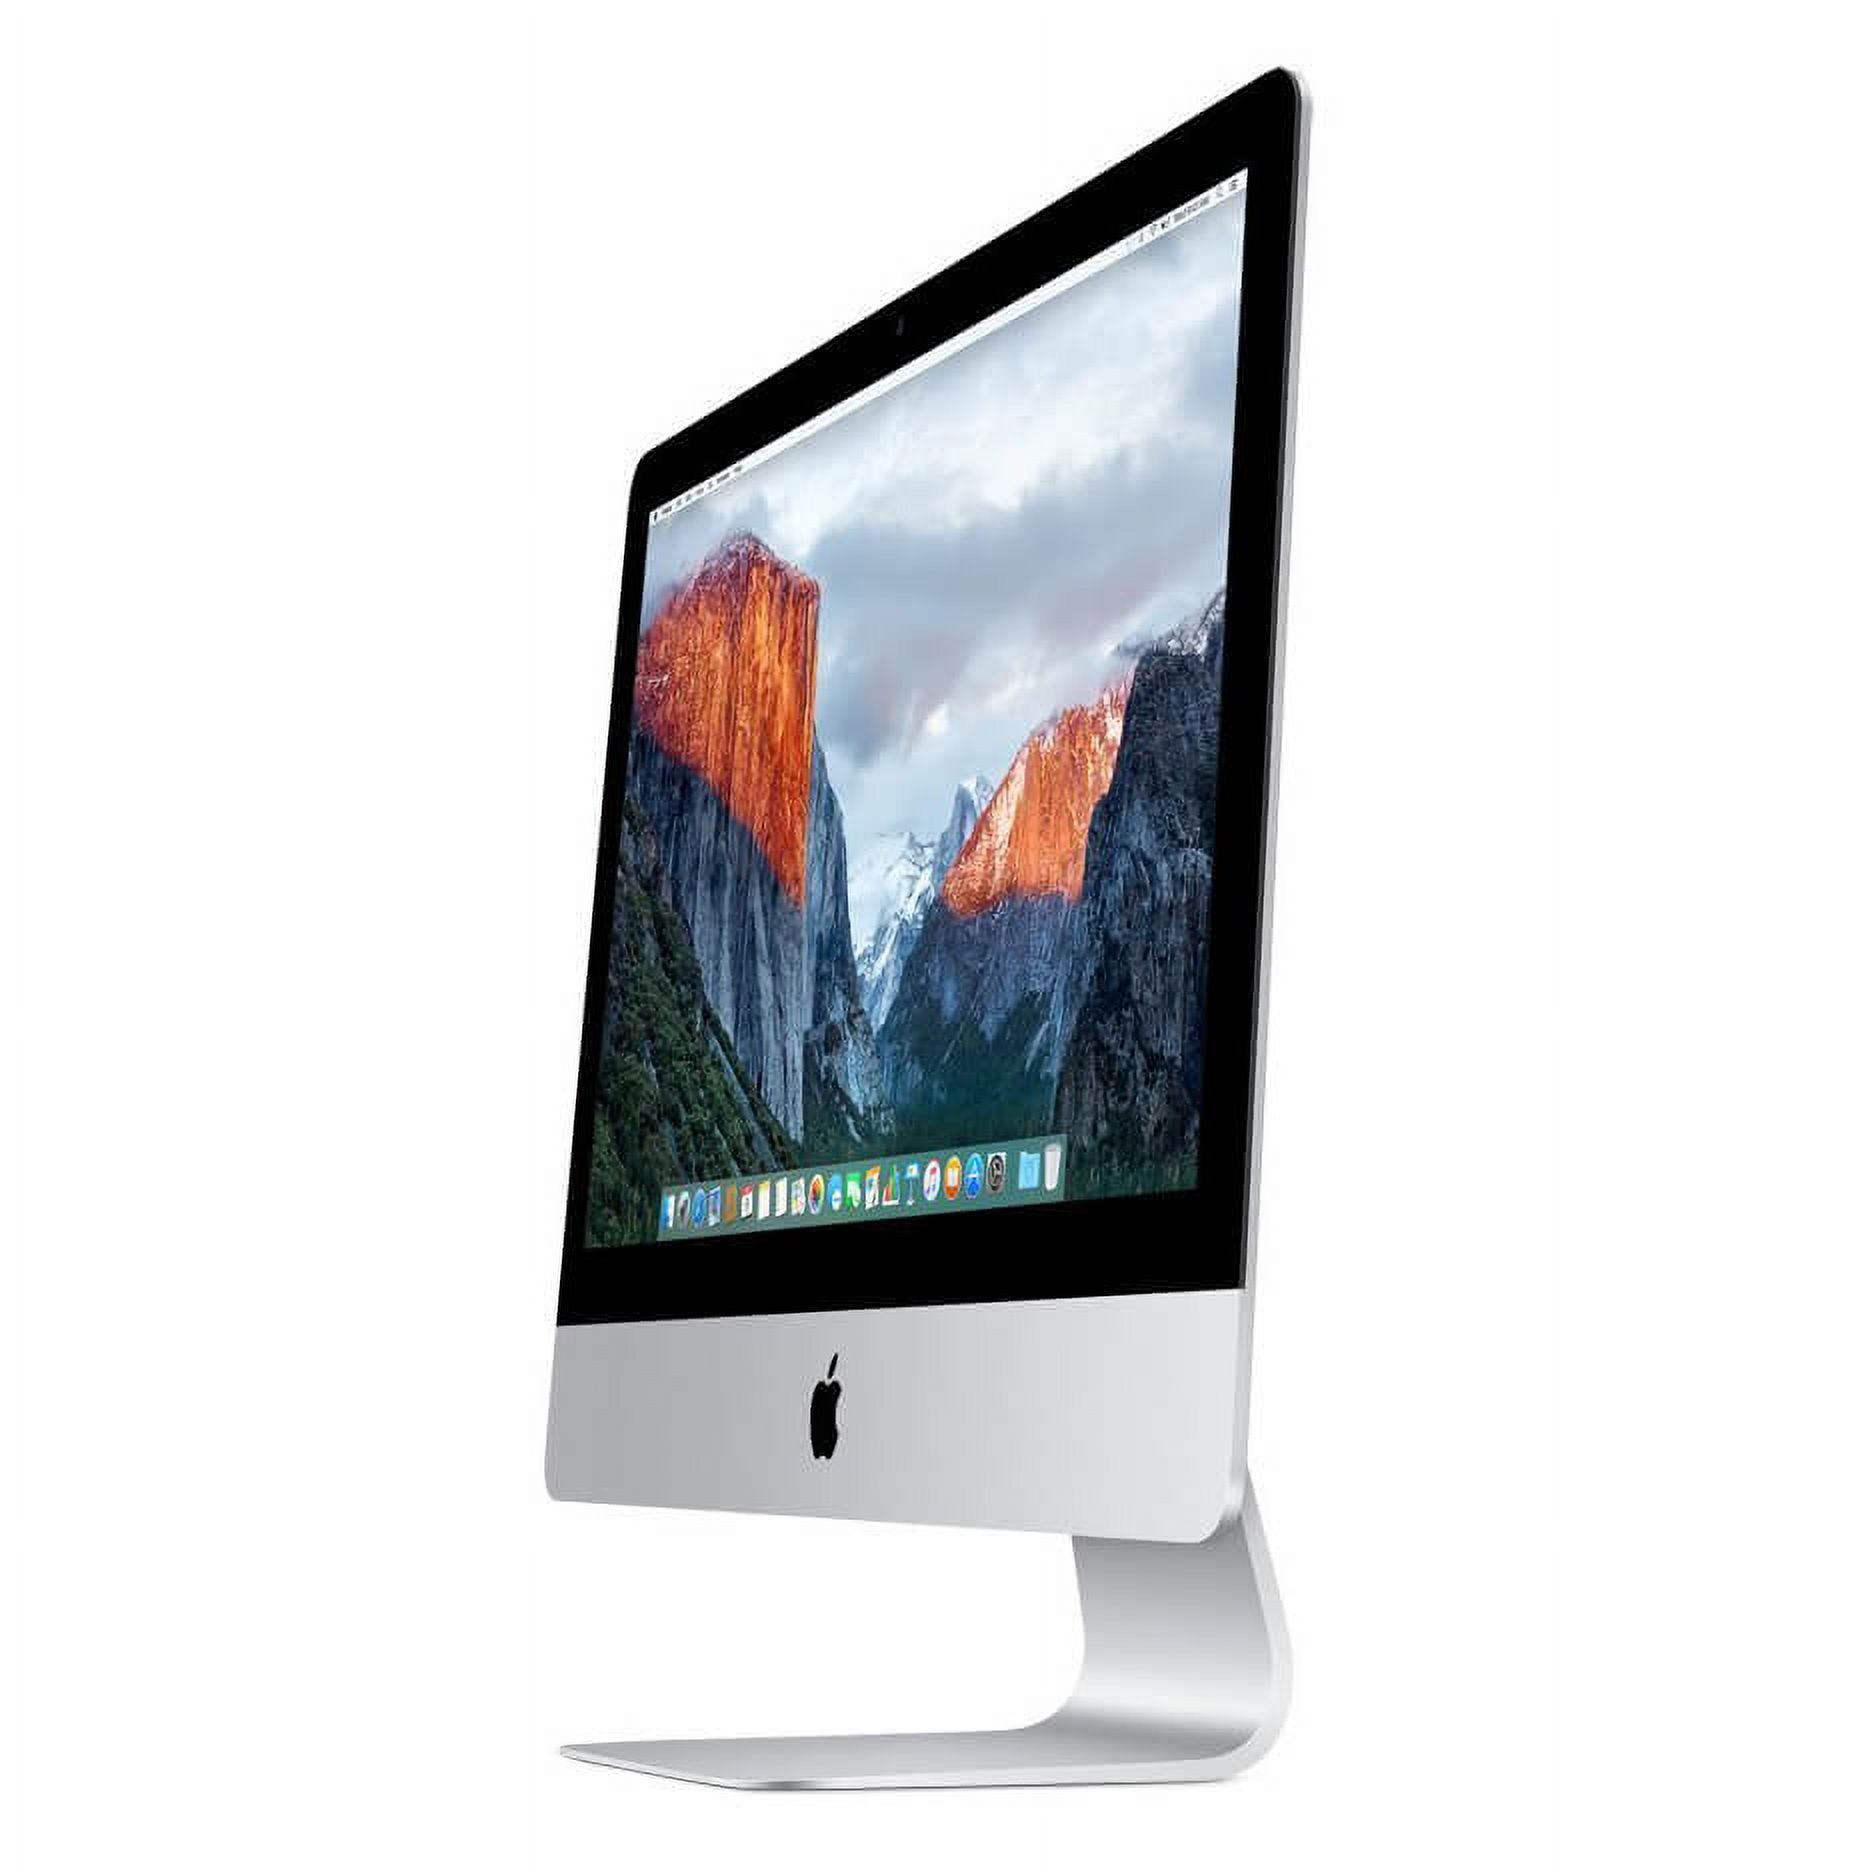 Restored Apple iMac 21.5 AIO Desktop Computer Intel Quad Core i5 8GB 1TB - MK442LL/A (Refurbished) - image 4 of 5